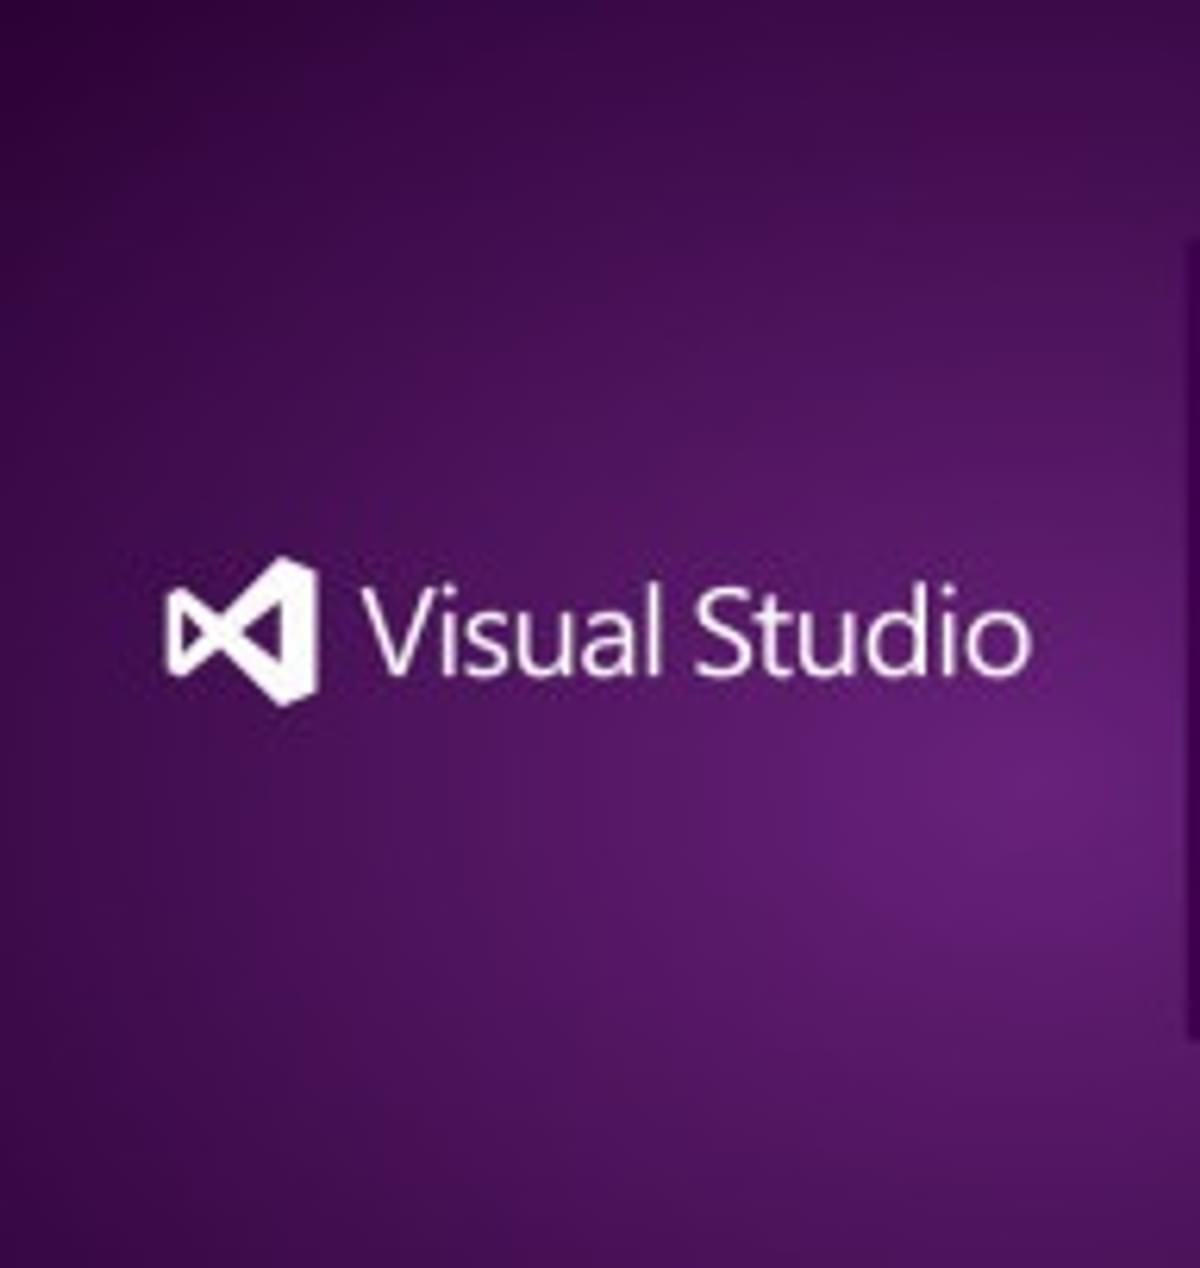 Microsoft Visual Studio 2017 versie 15.9 is beschikbaar image